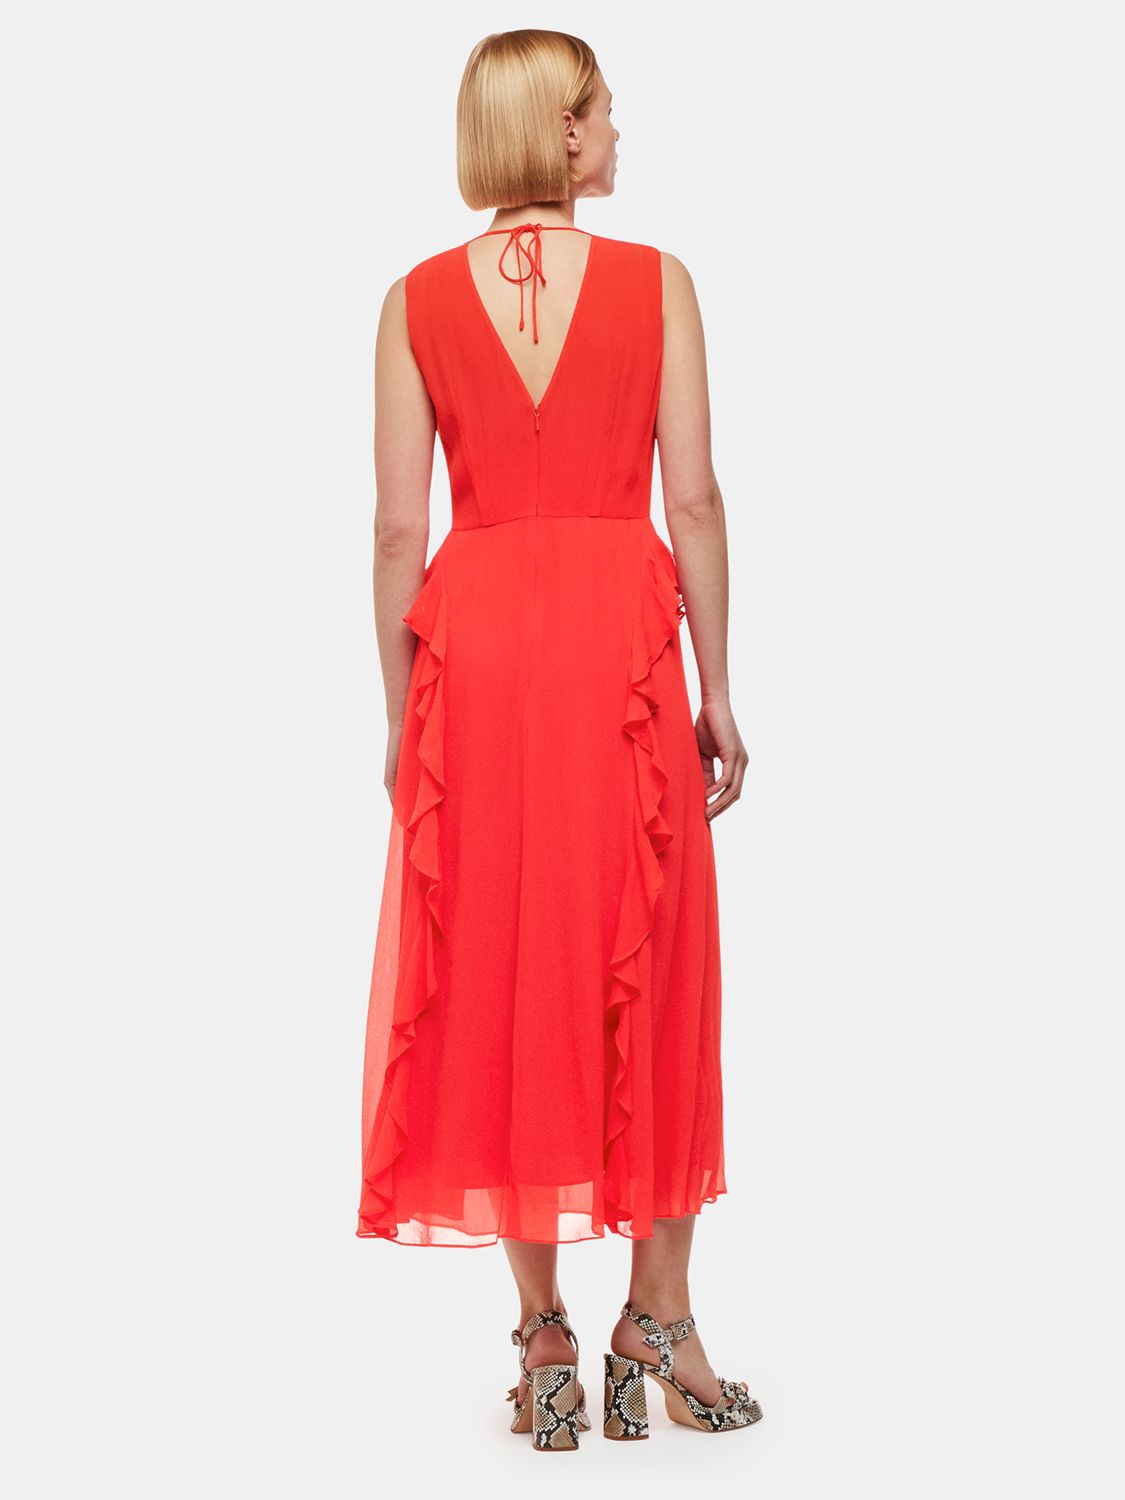 Whistles Nellie Frill Detail Midi Dress, Red, 6